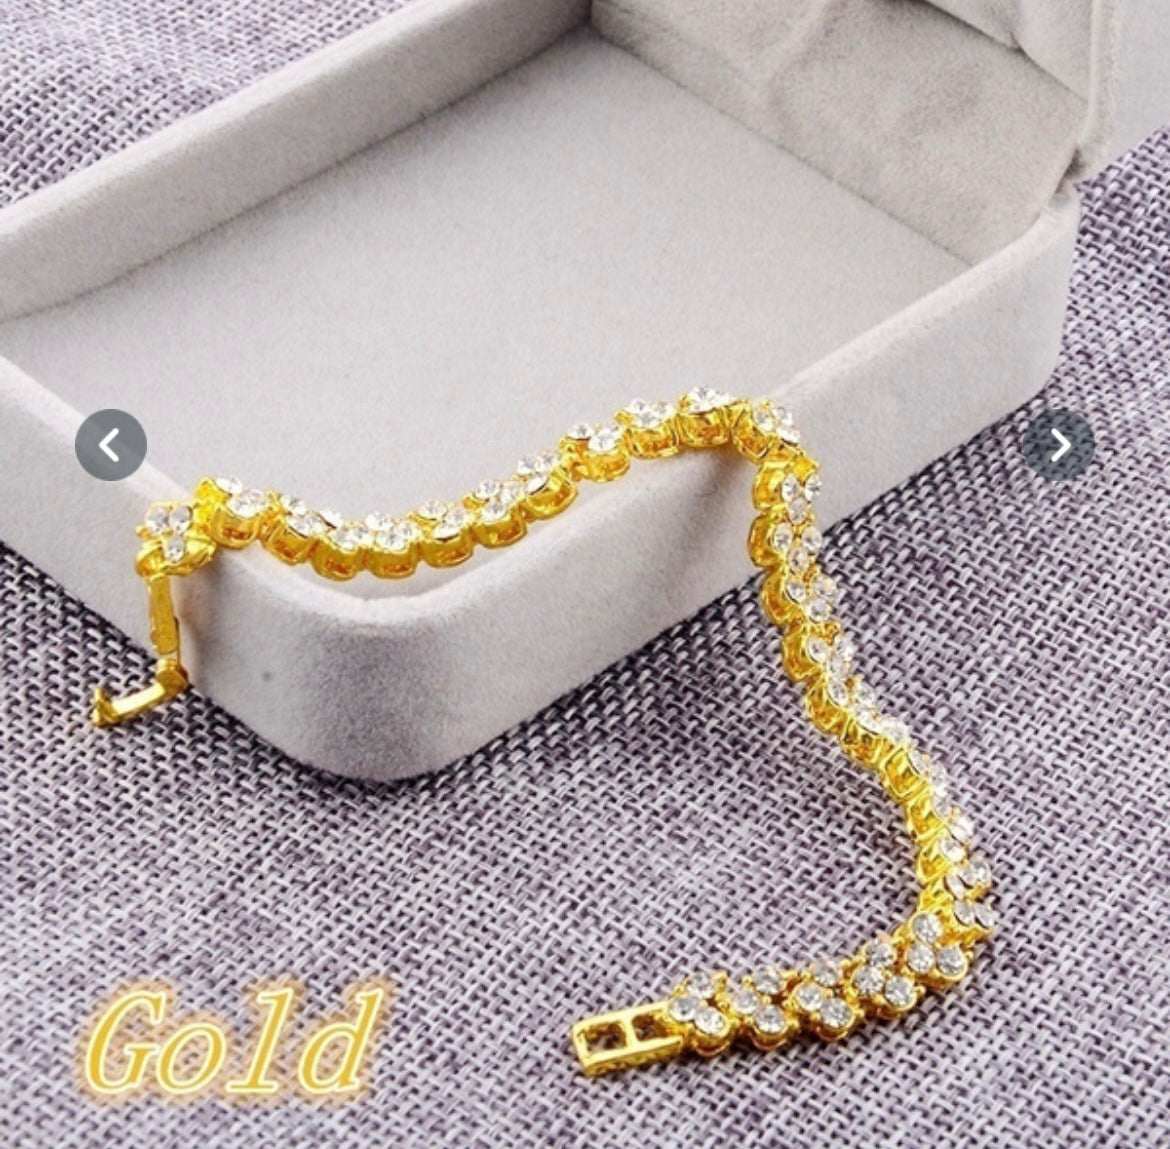 New Fashion Roman Style women Silver/Gold Crystal diamond bracelets